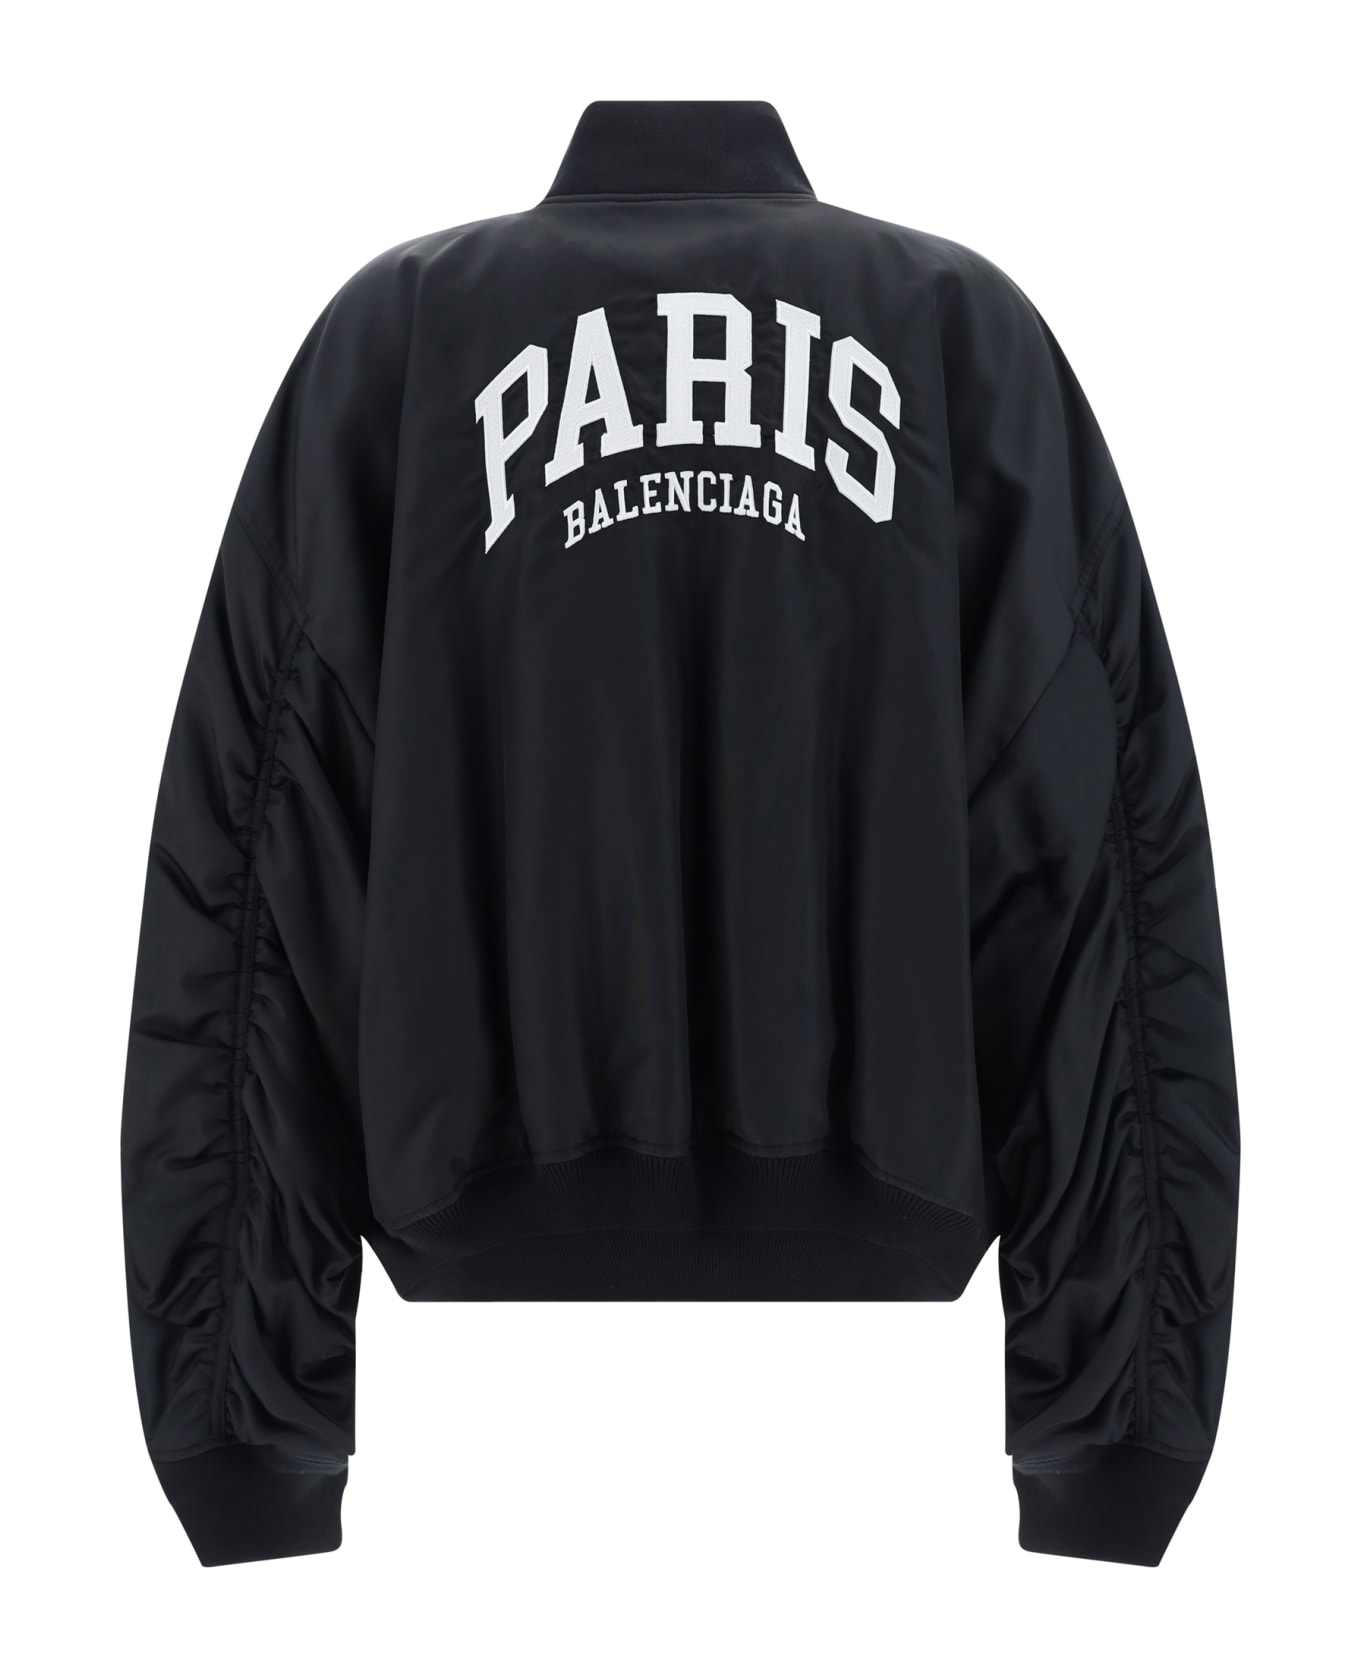 Balenciaga Paris Varsity Jacket - Black ジャケット